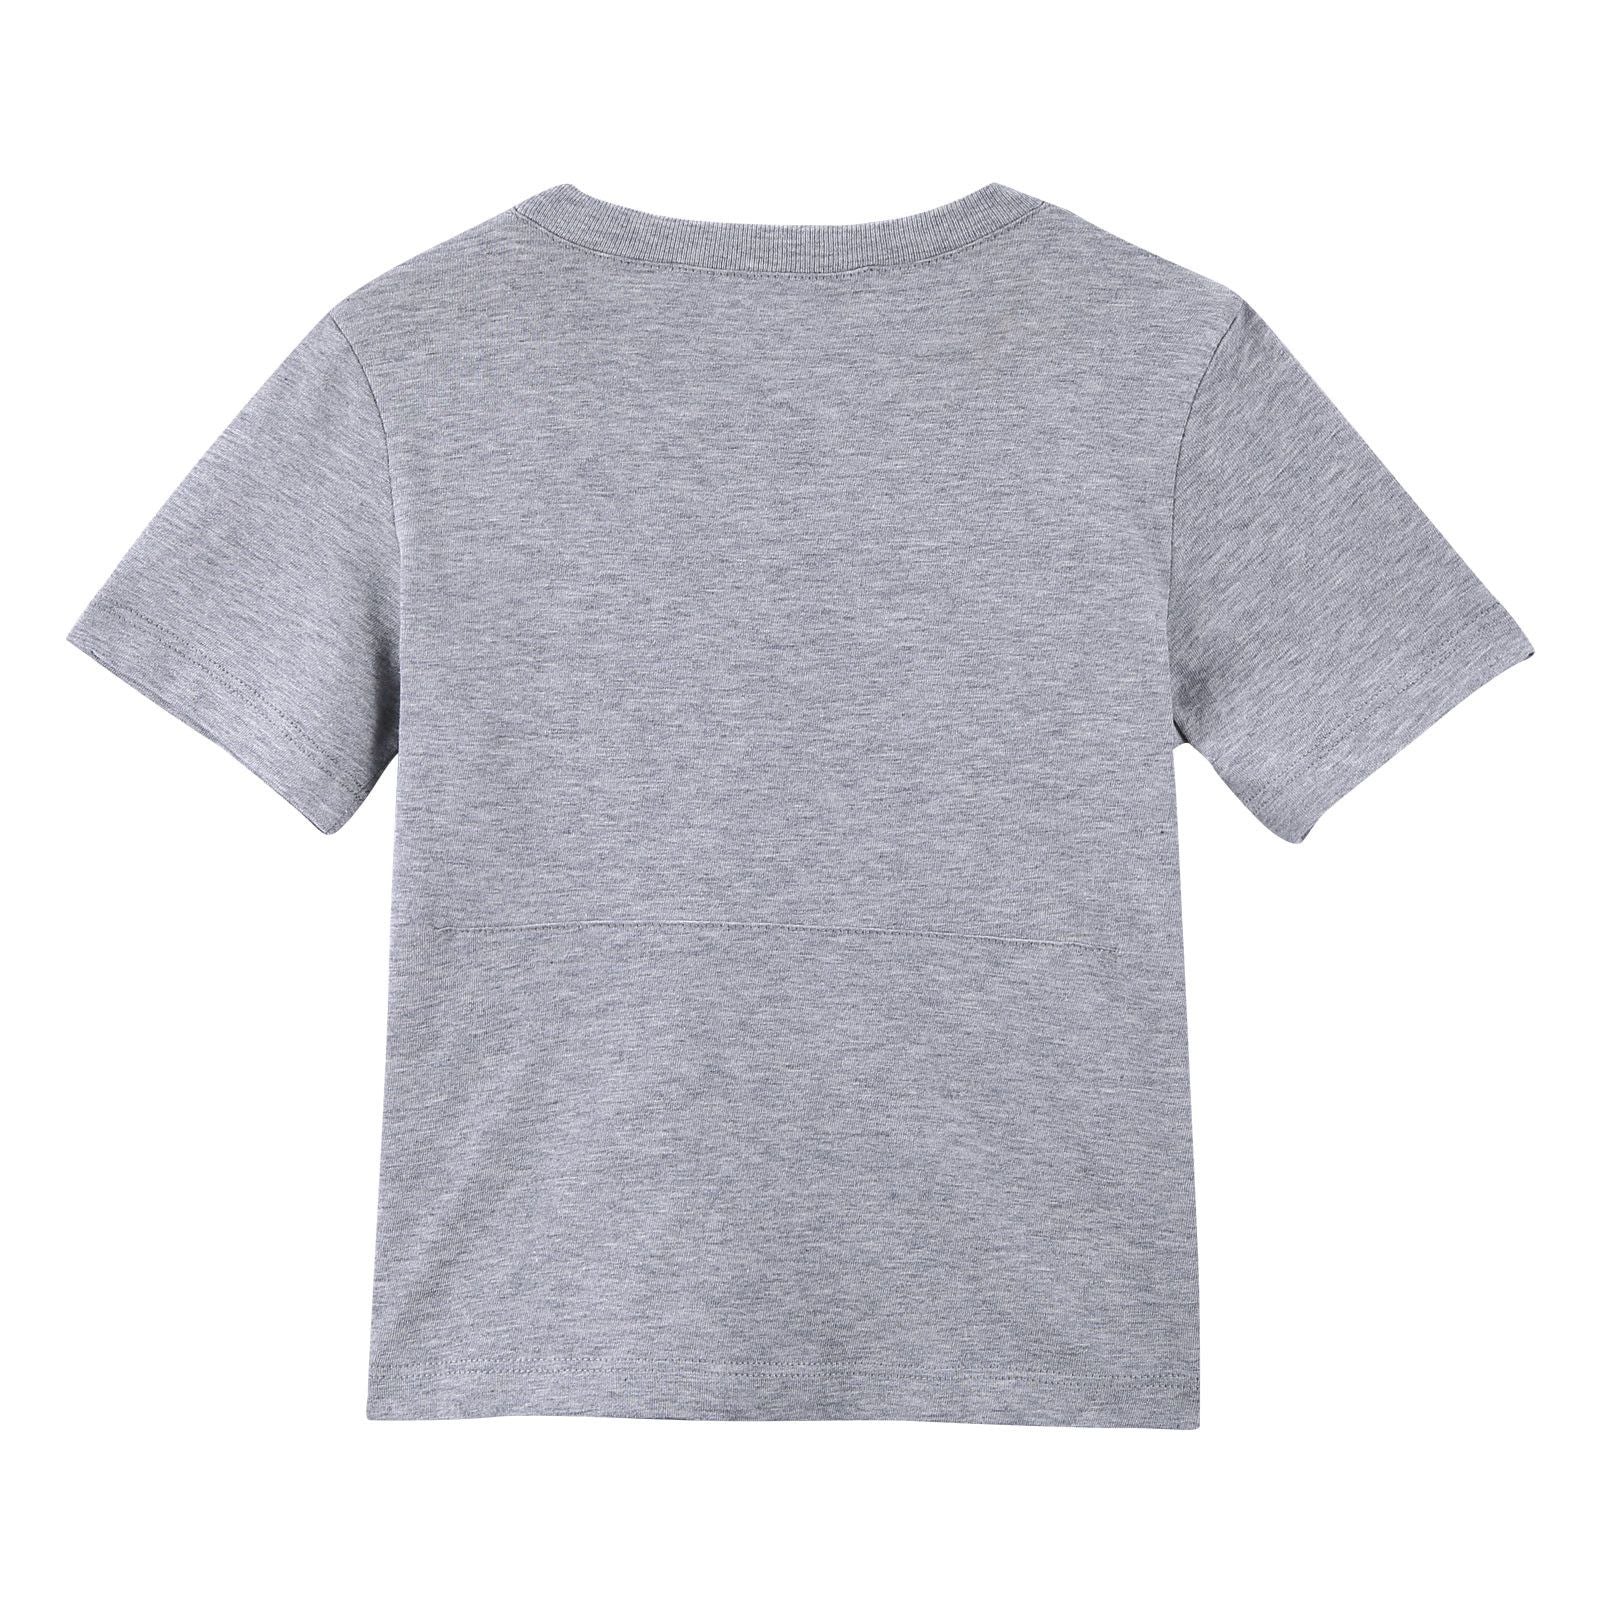 Girls Grey Animal Printed Cotton Jersey T-Shirt - CÉMAROSE | Children's Fashion Store - 2